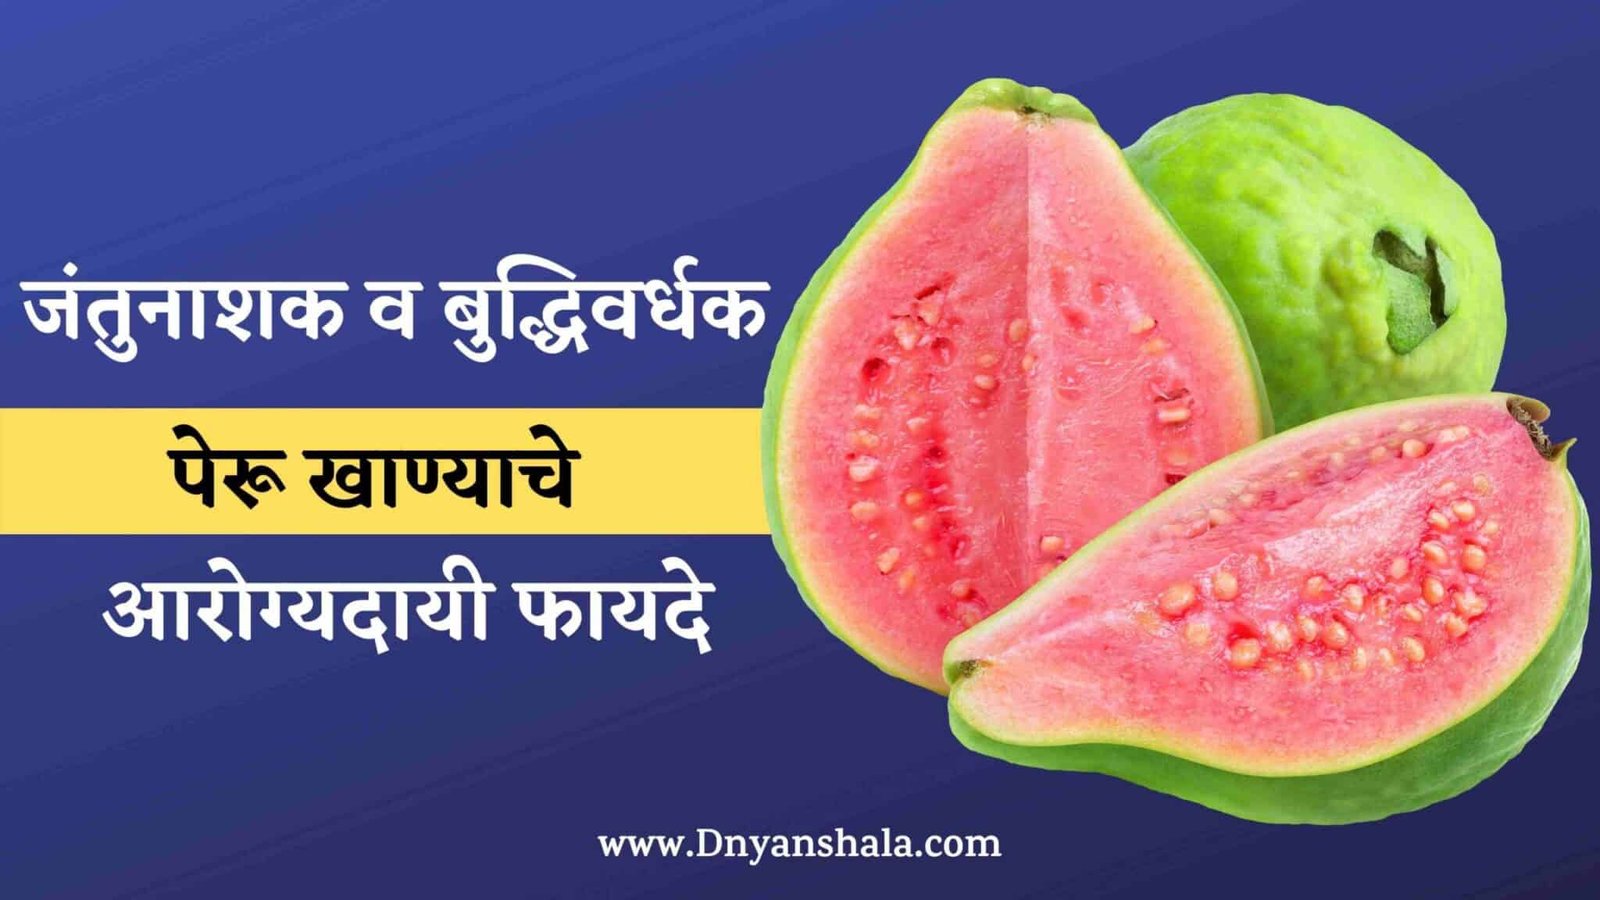 Guava Benefits in Marathi